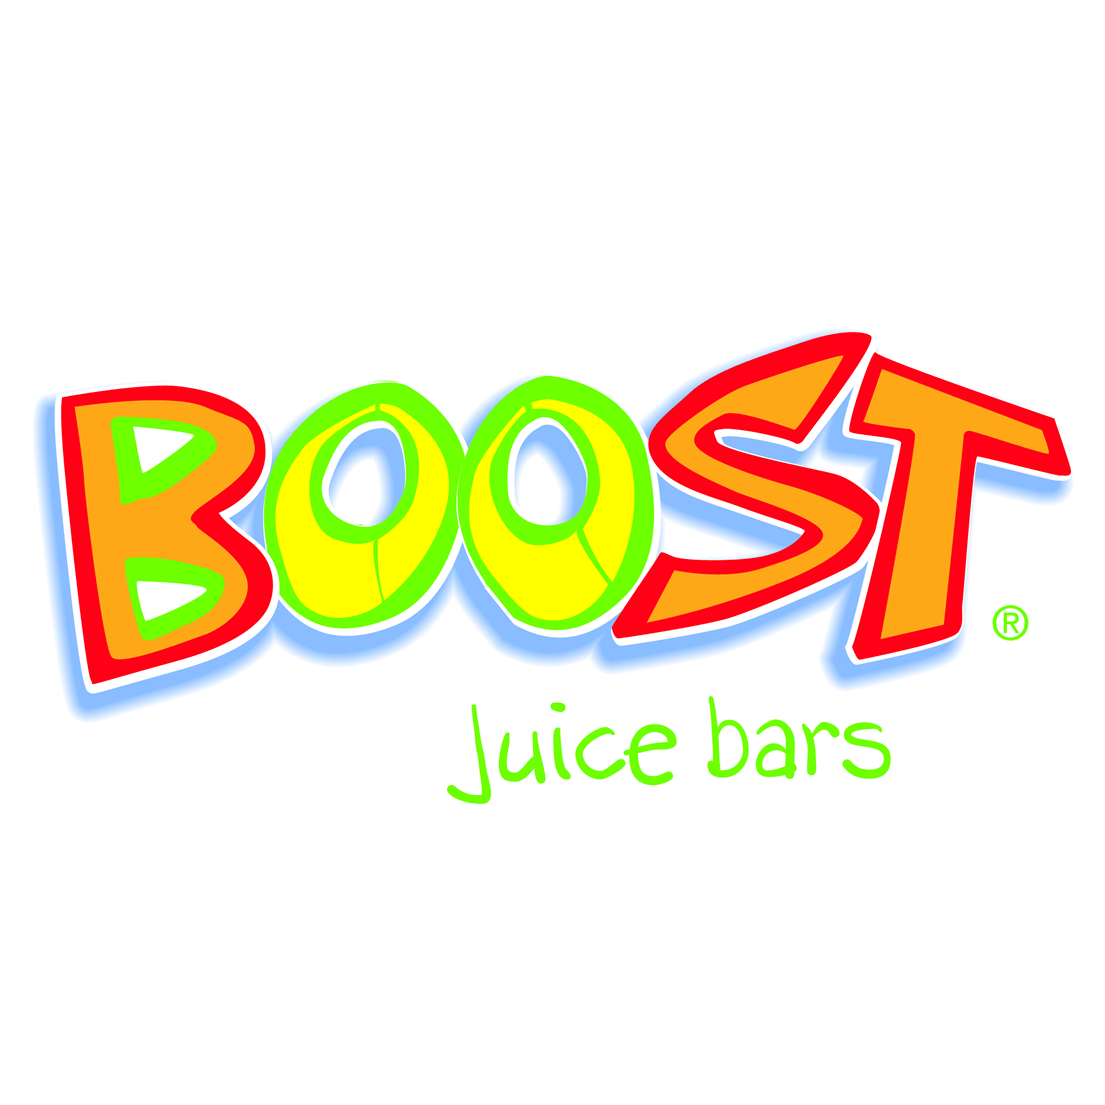 Boost Juice Logo - Boost juice logo png 1 » PNG Image